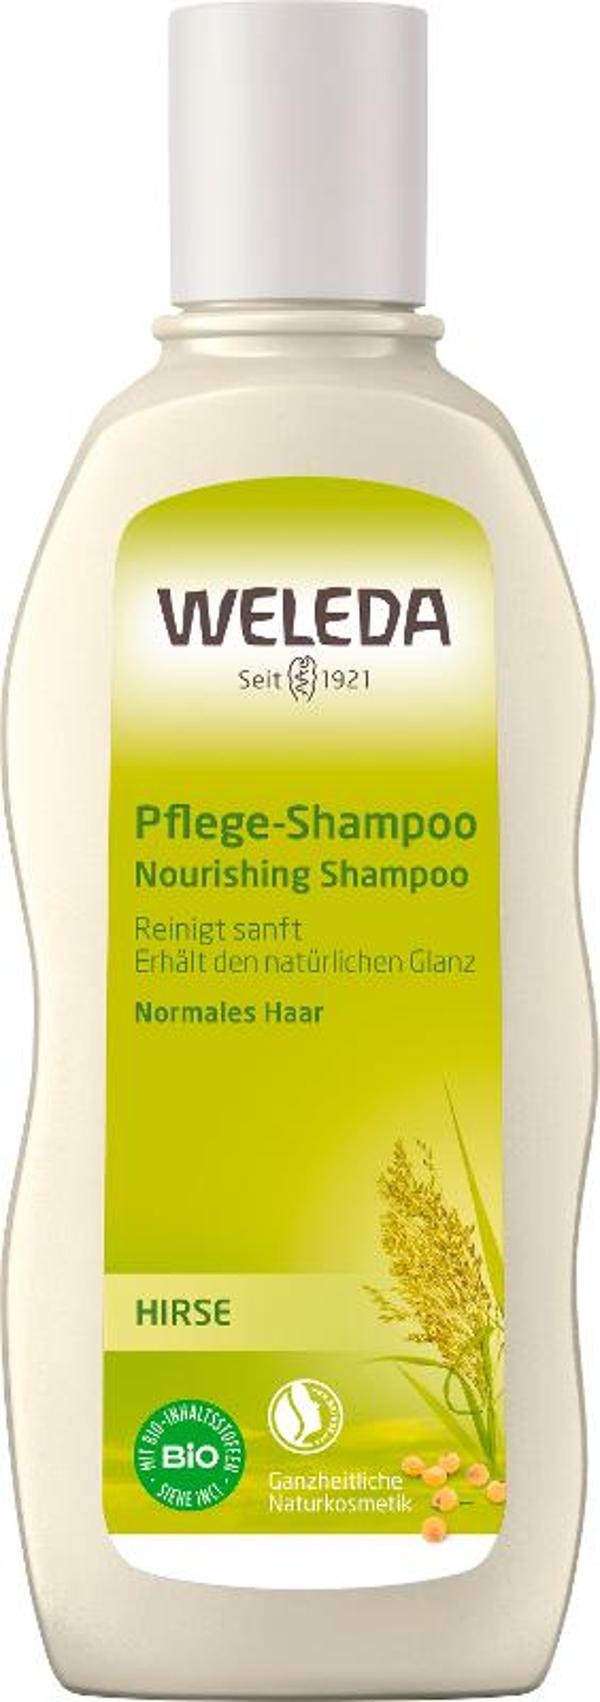 Produktfoto zu Hirse Pflege Shampoo 190 ml Weleda